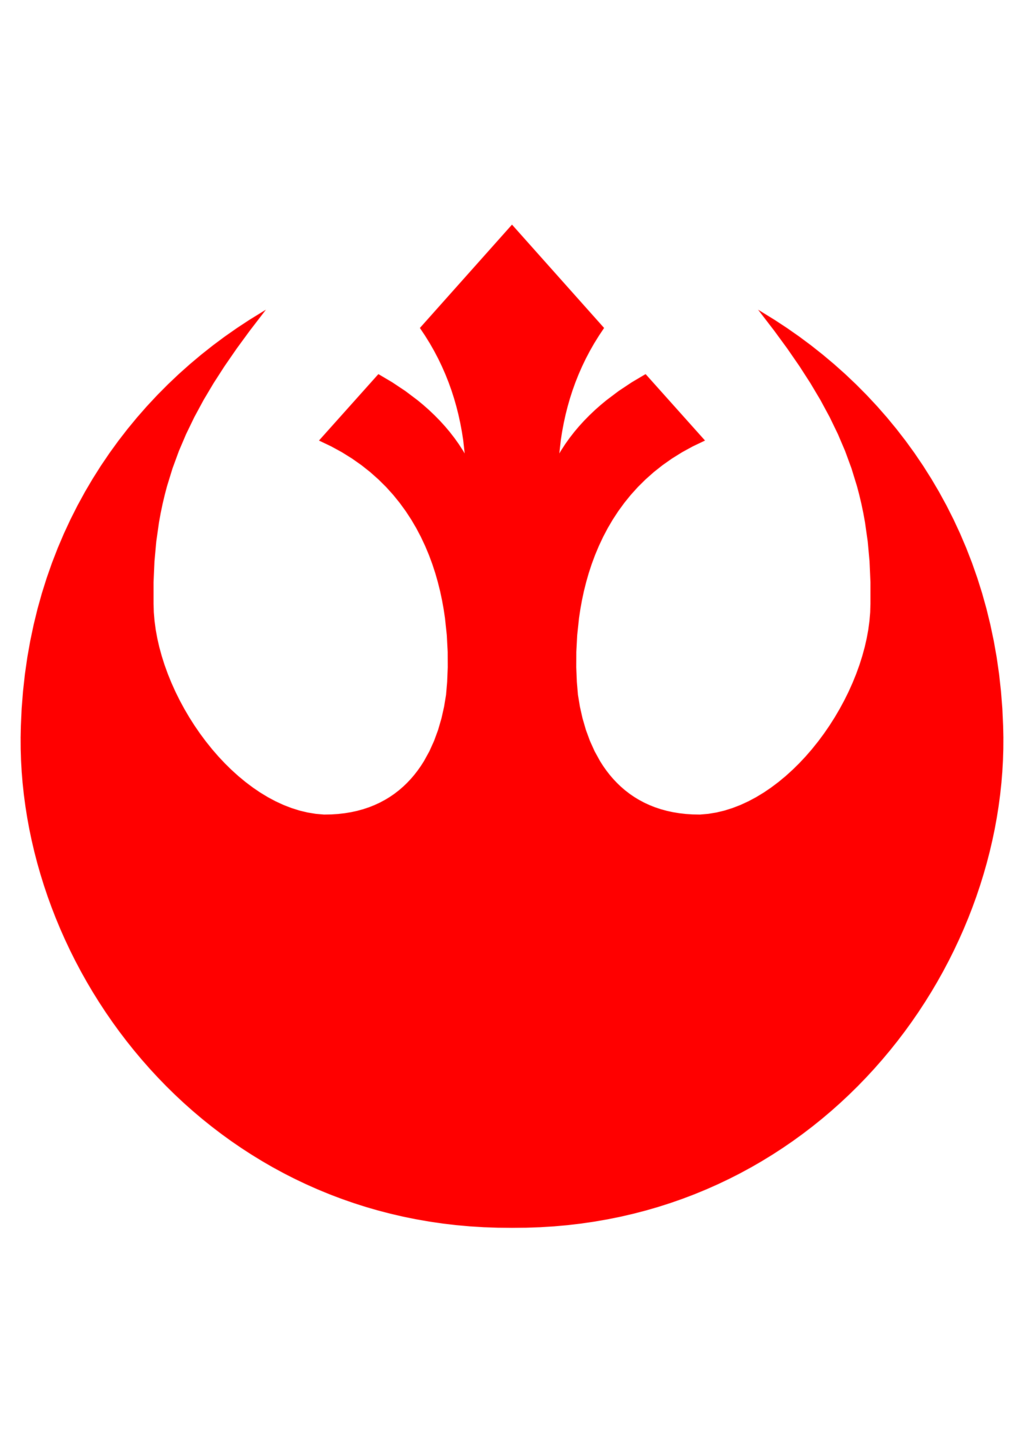 star wars rebellion logo transparent blue